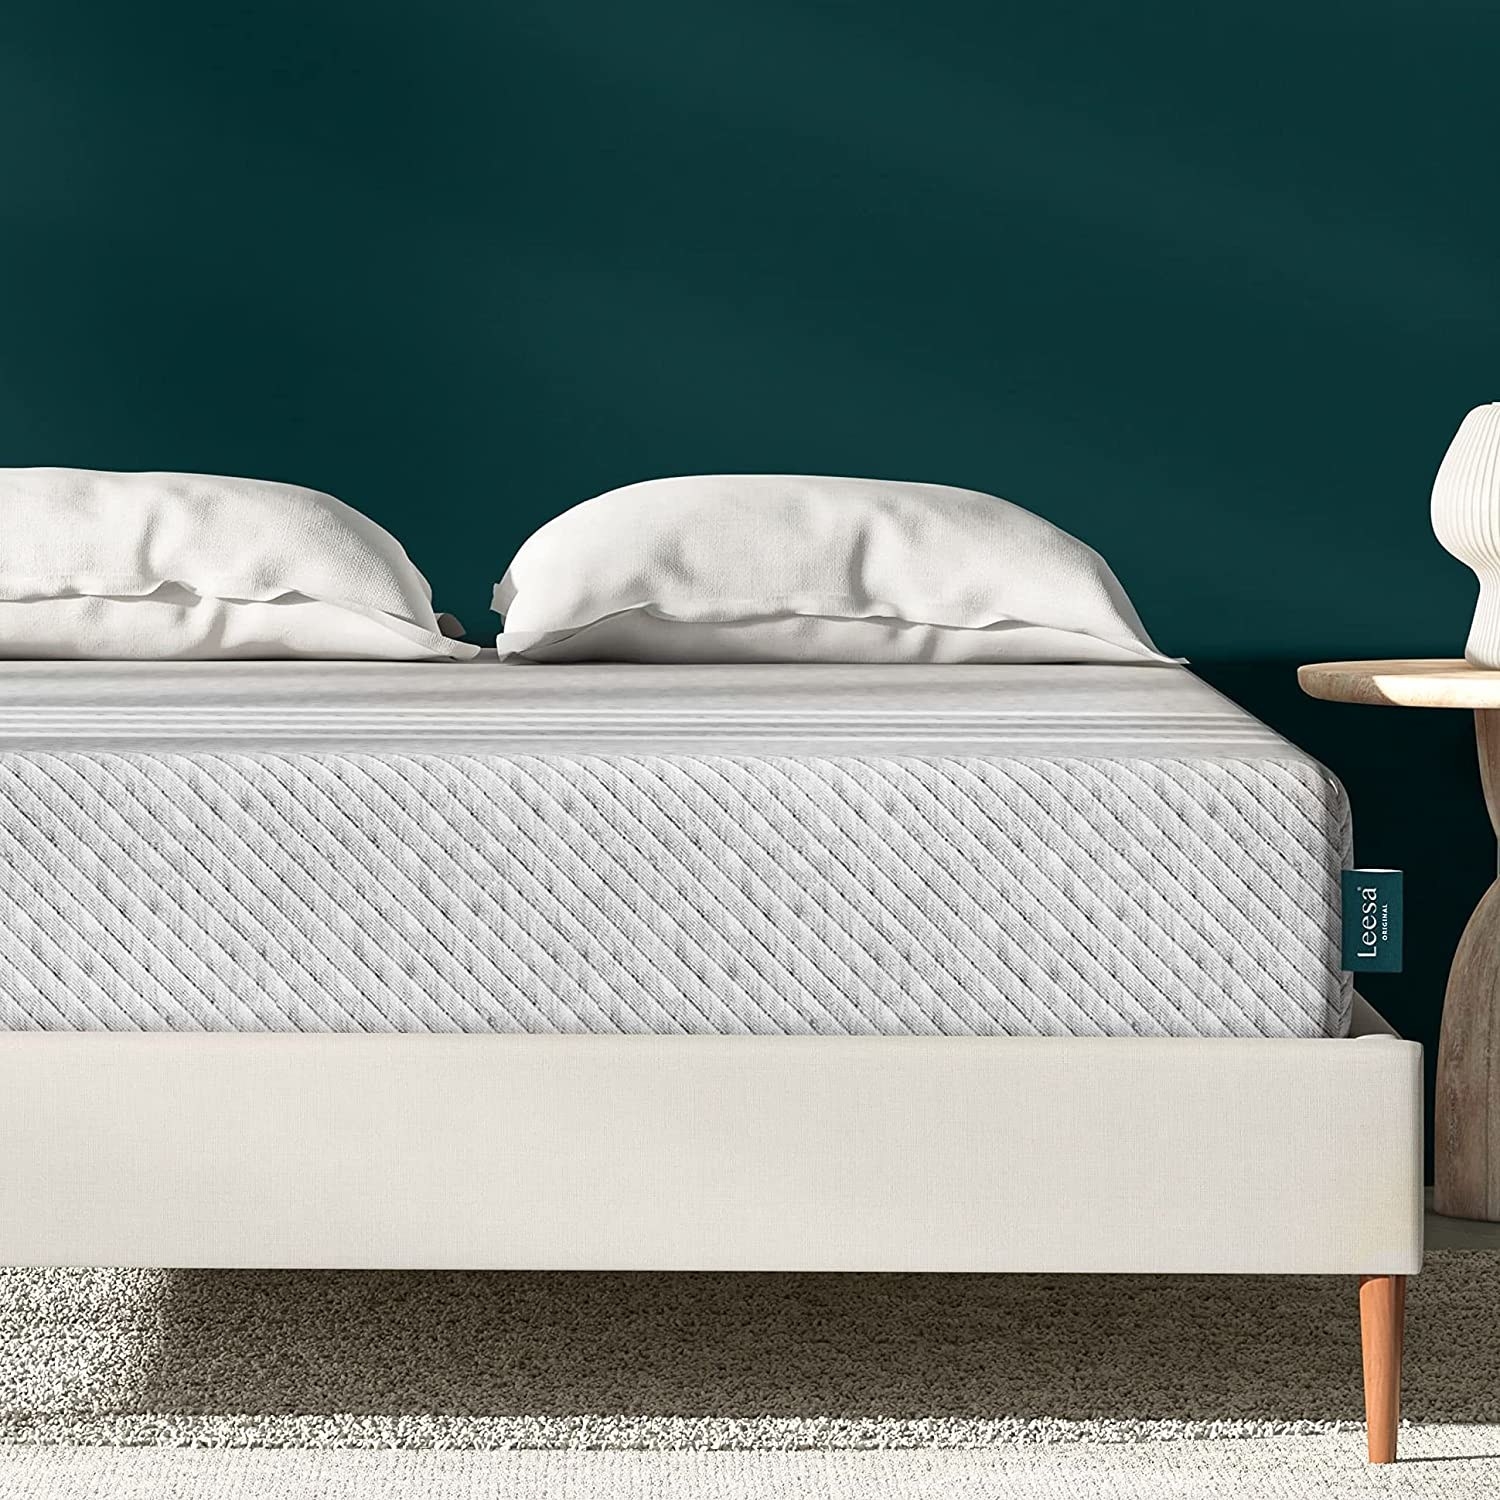 Leesa original mattress on white fabric bed frame